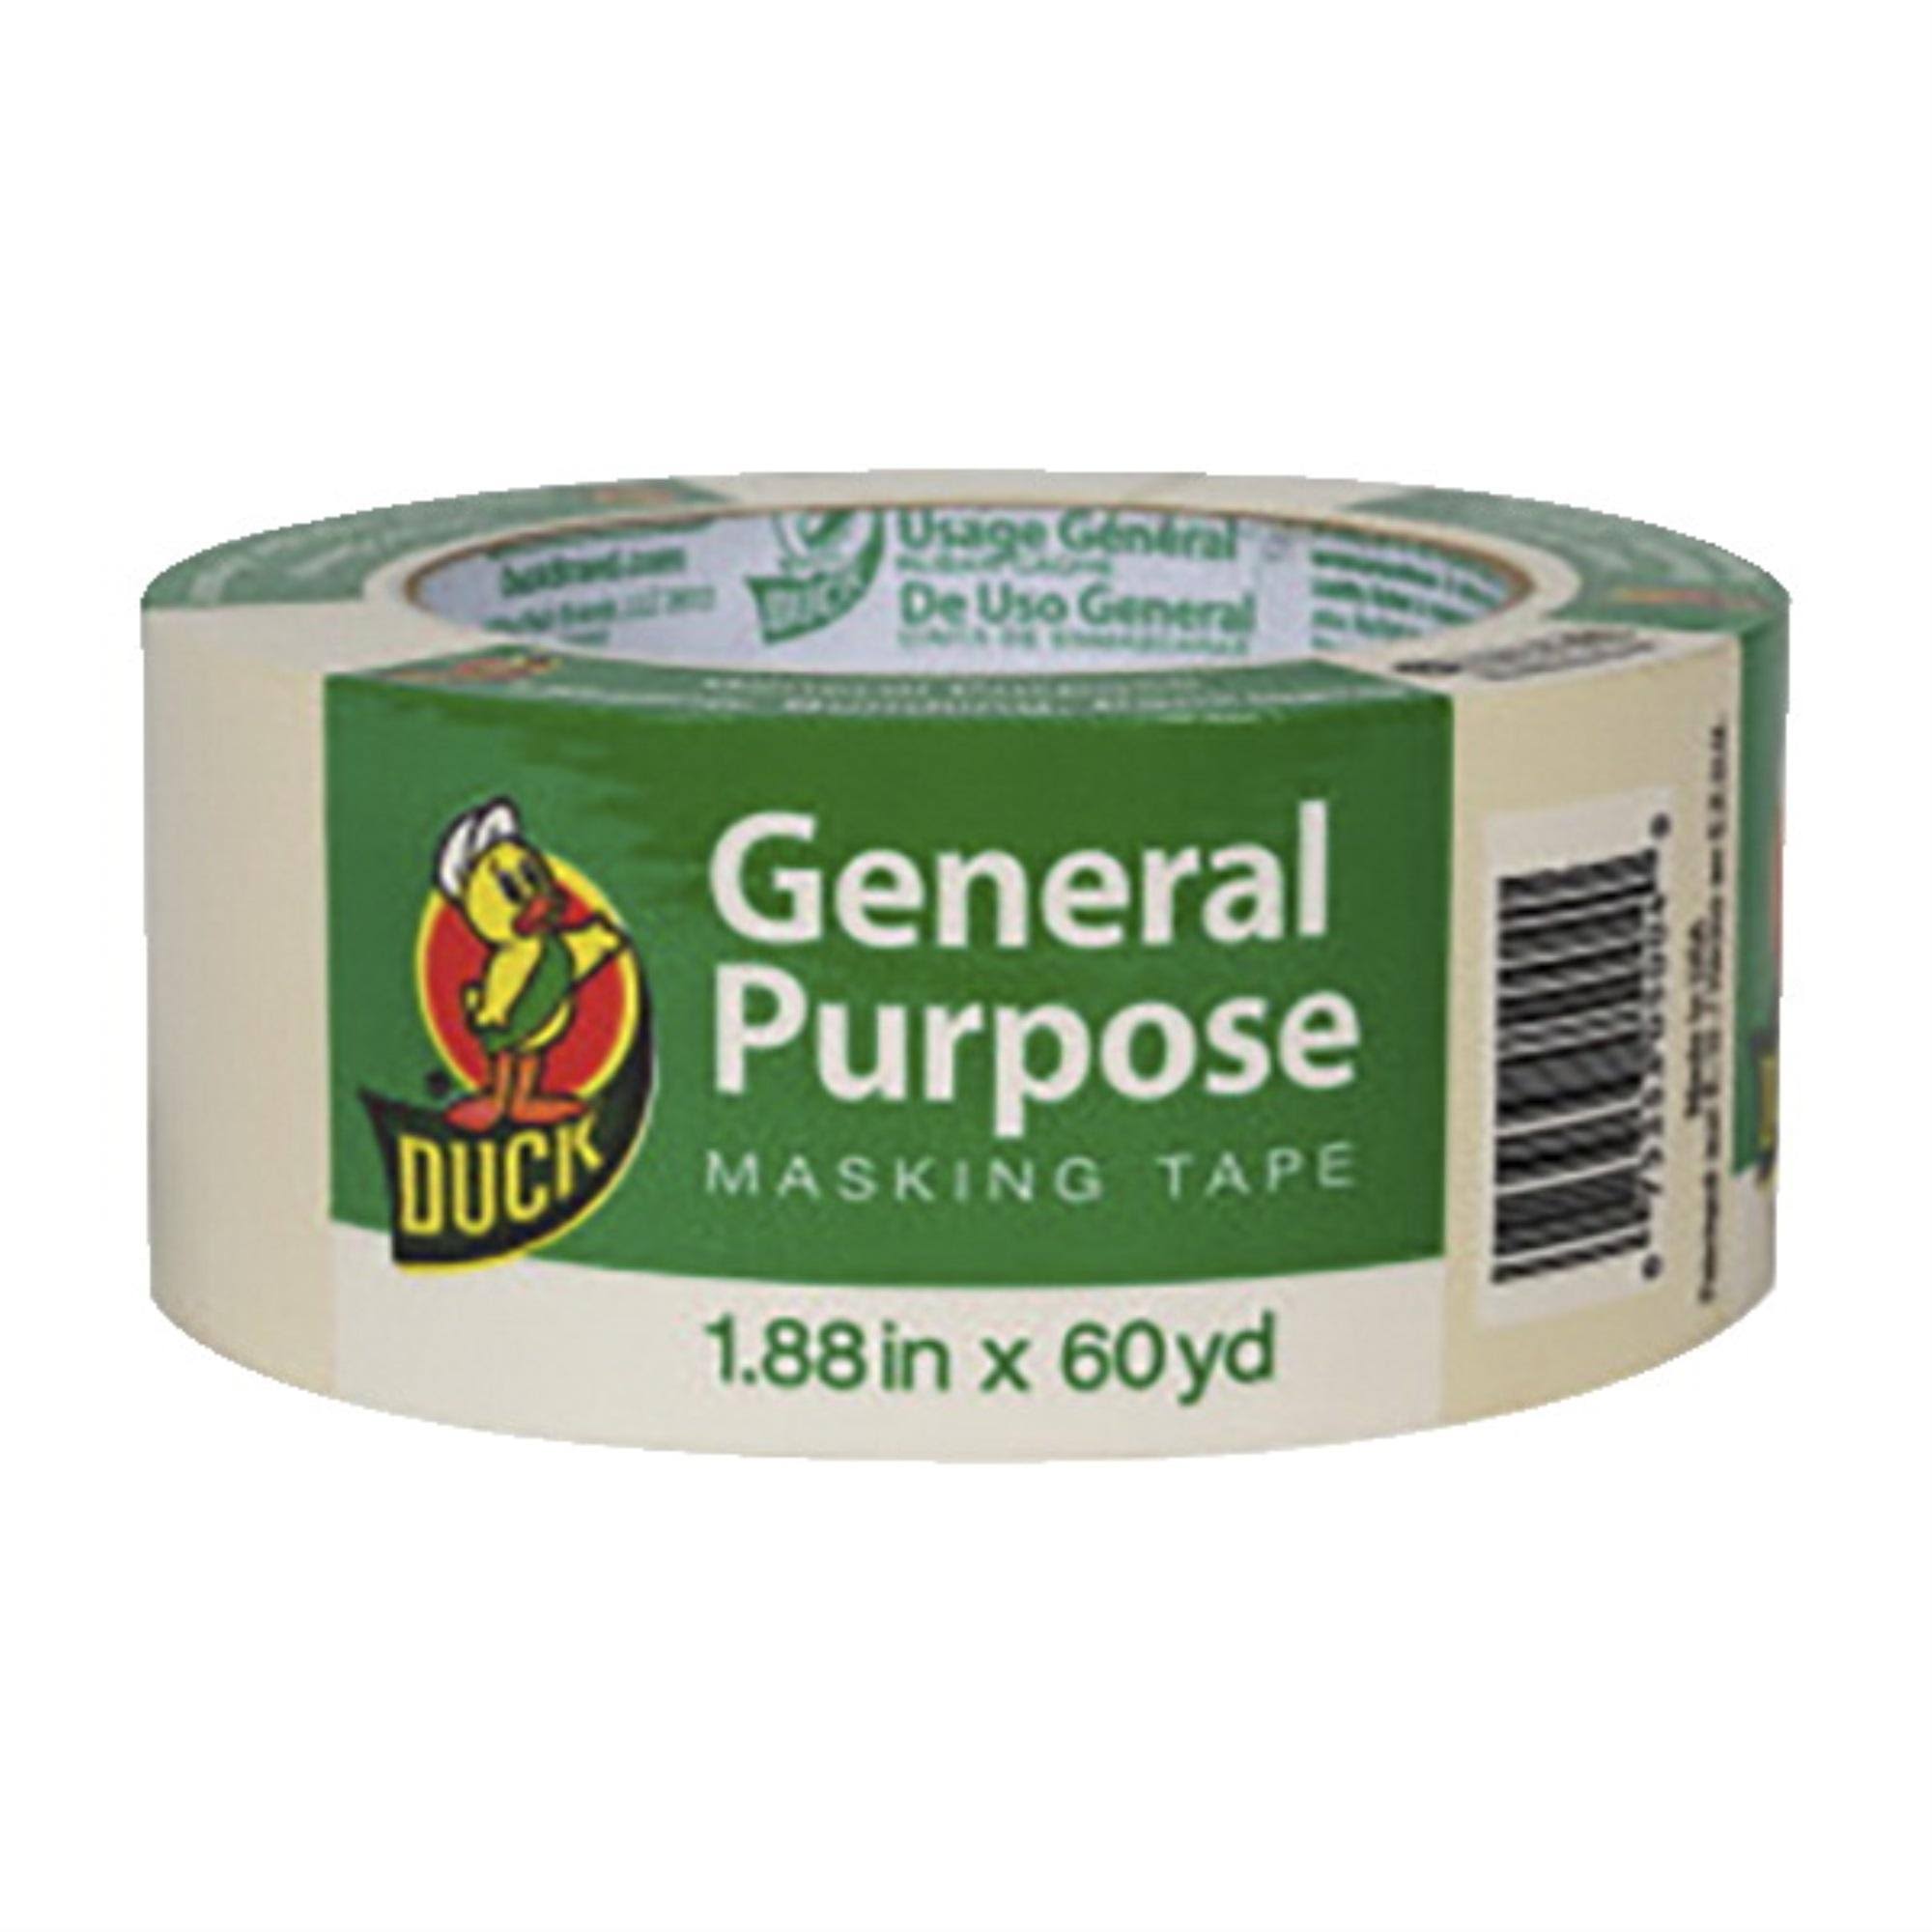 Duck General Purpose Masking Tape - Beige